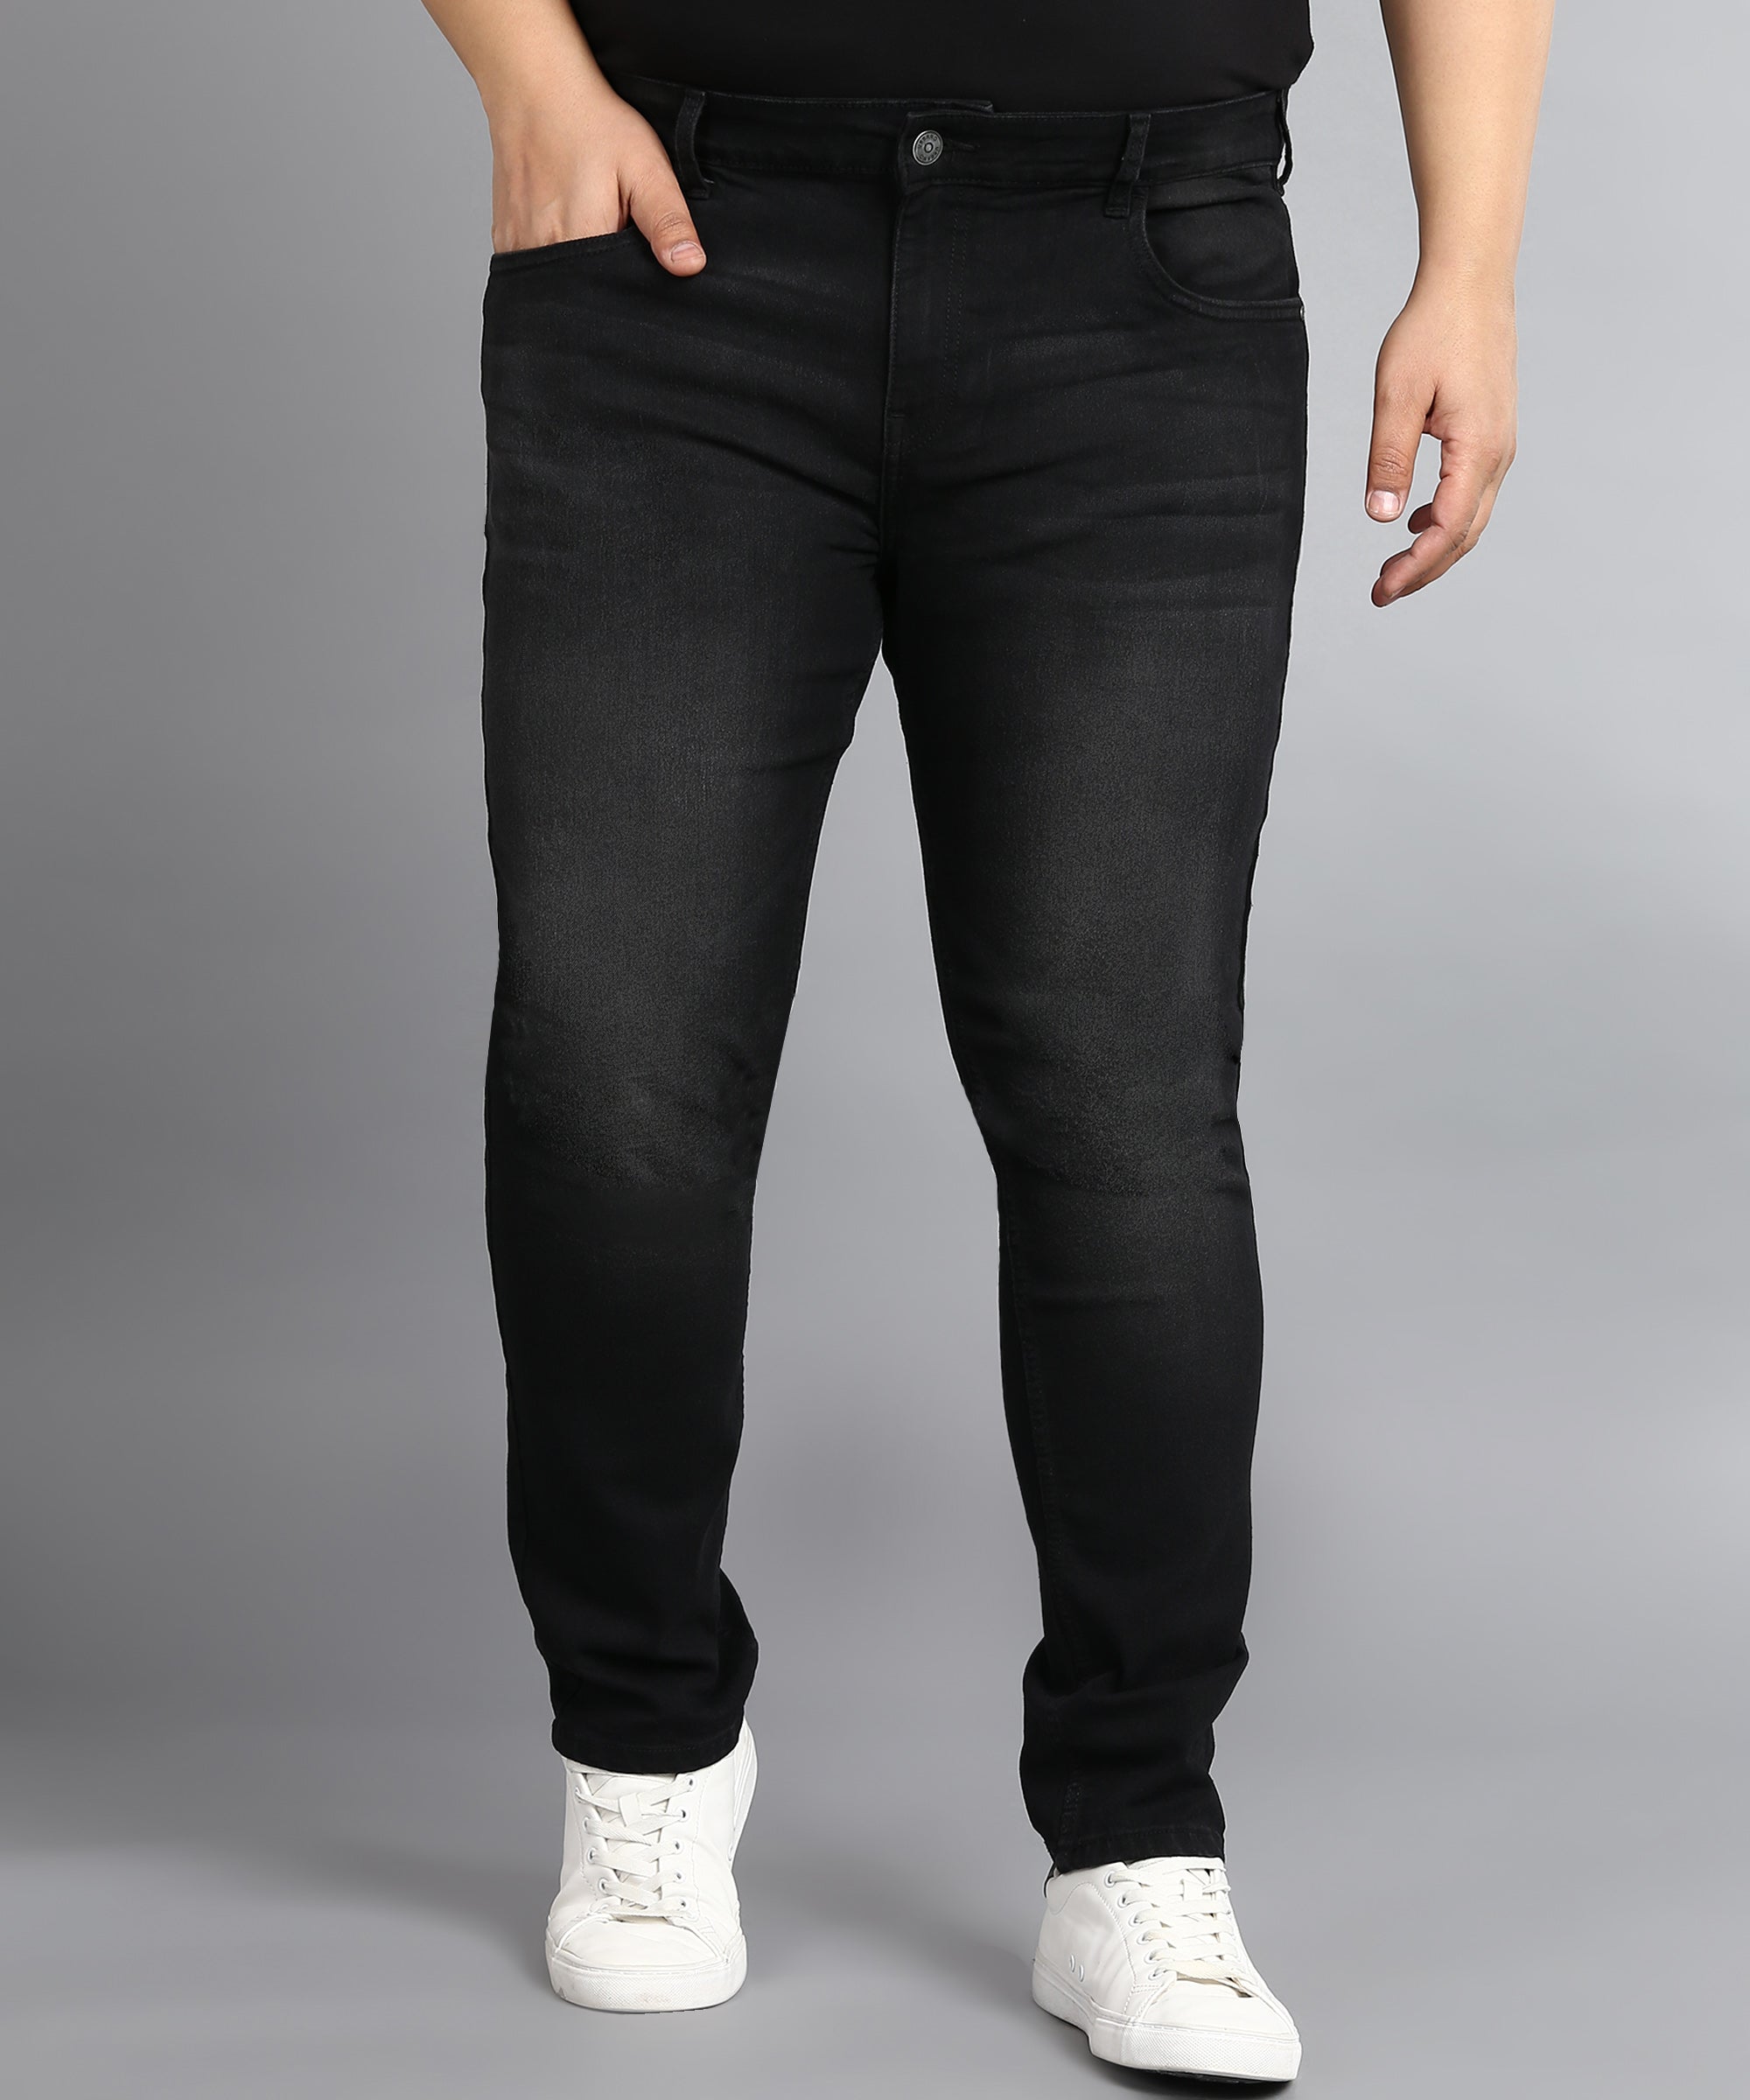 Urbano Plus Men's Black Regular Fit Washed Jeans Stretchable